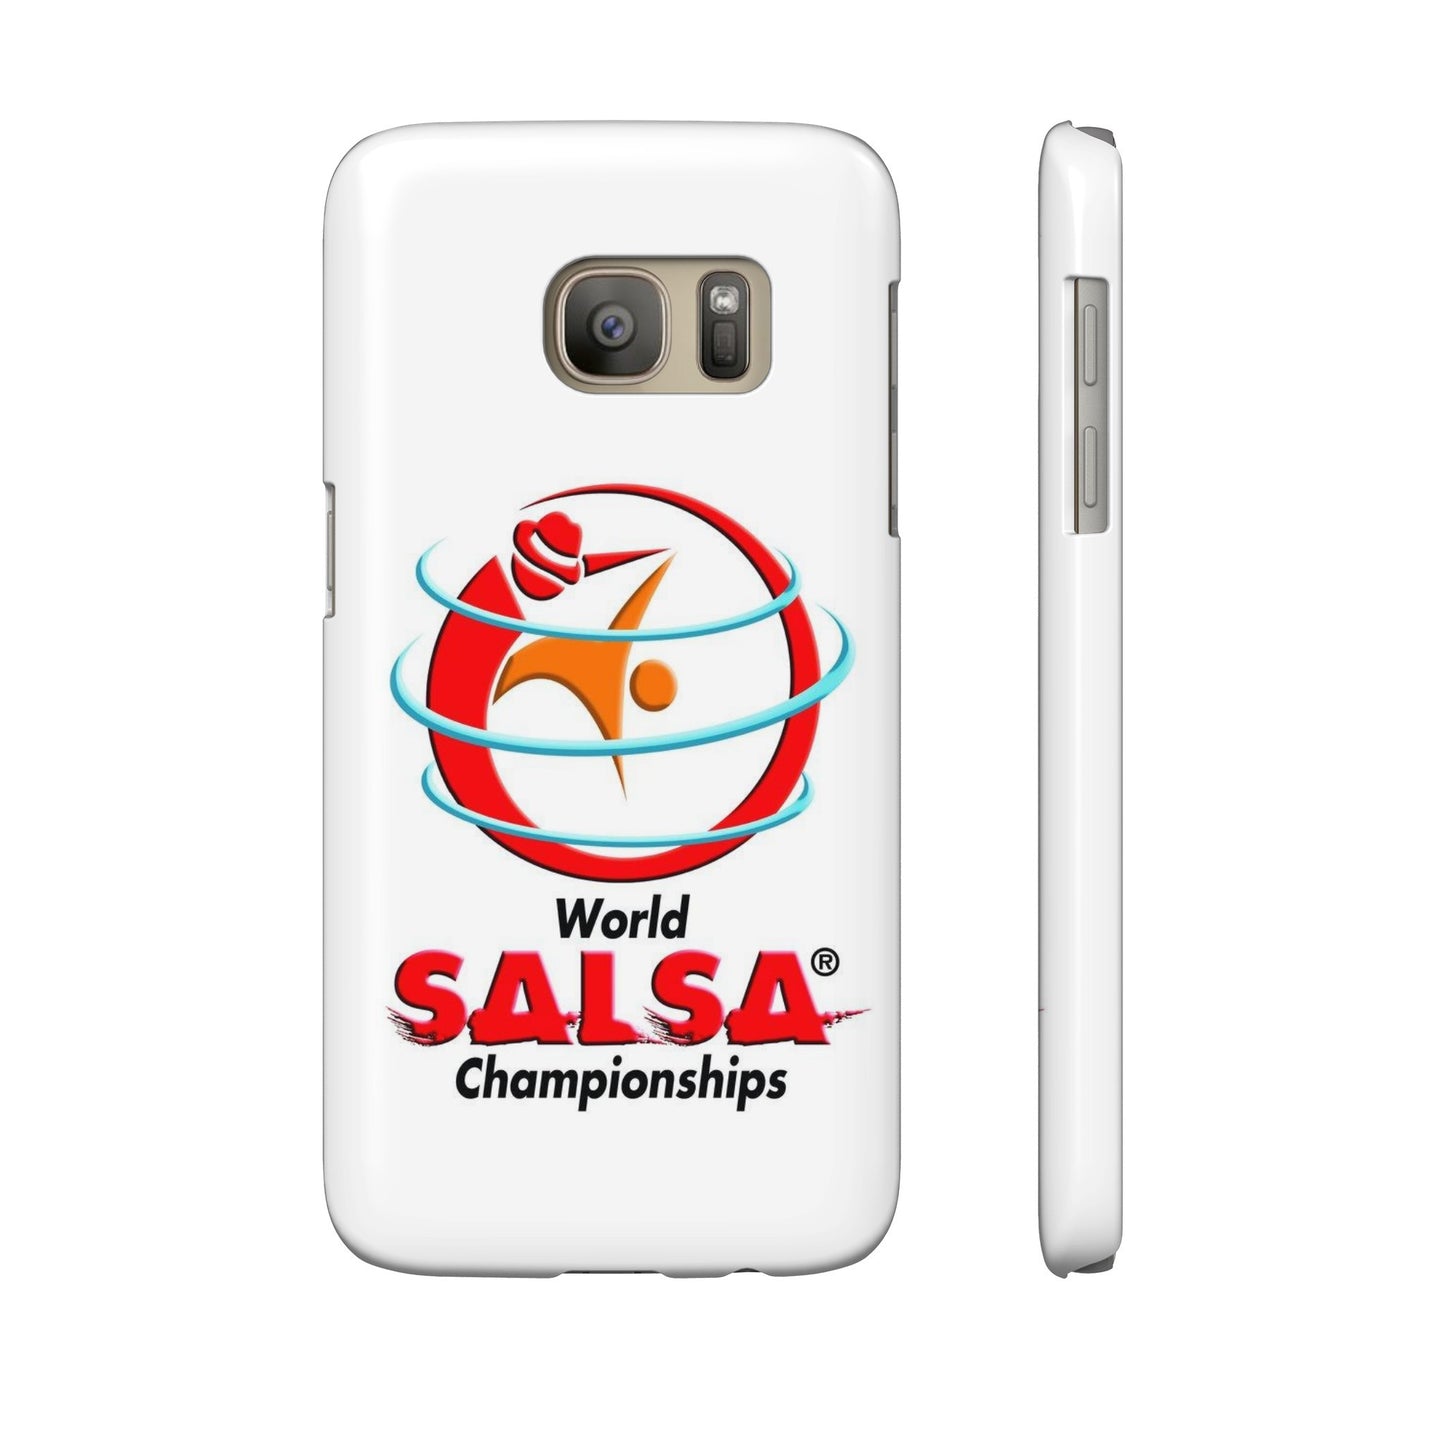 Slim Samsung Galaxy S7 - World Salsa Championships